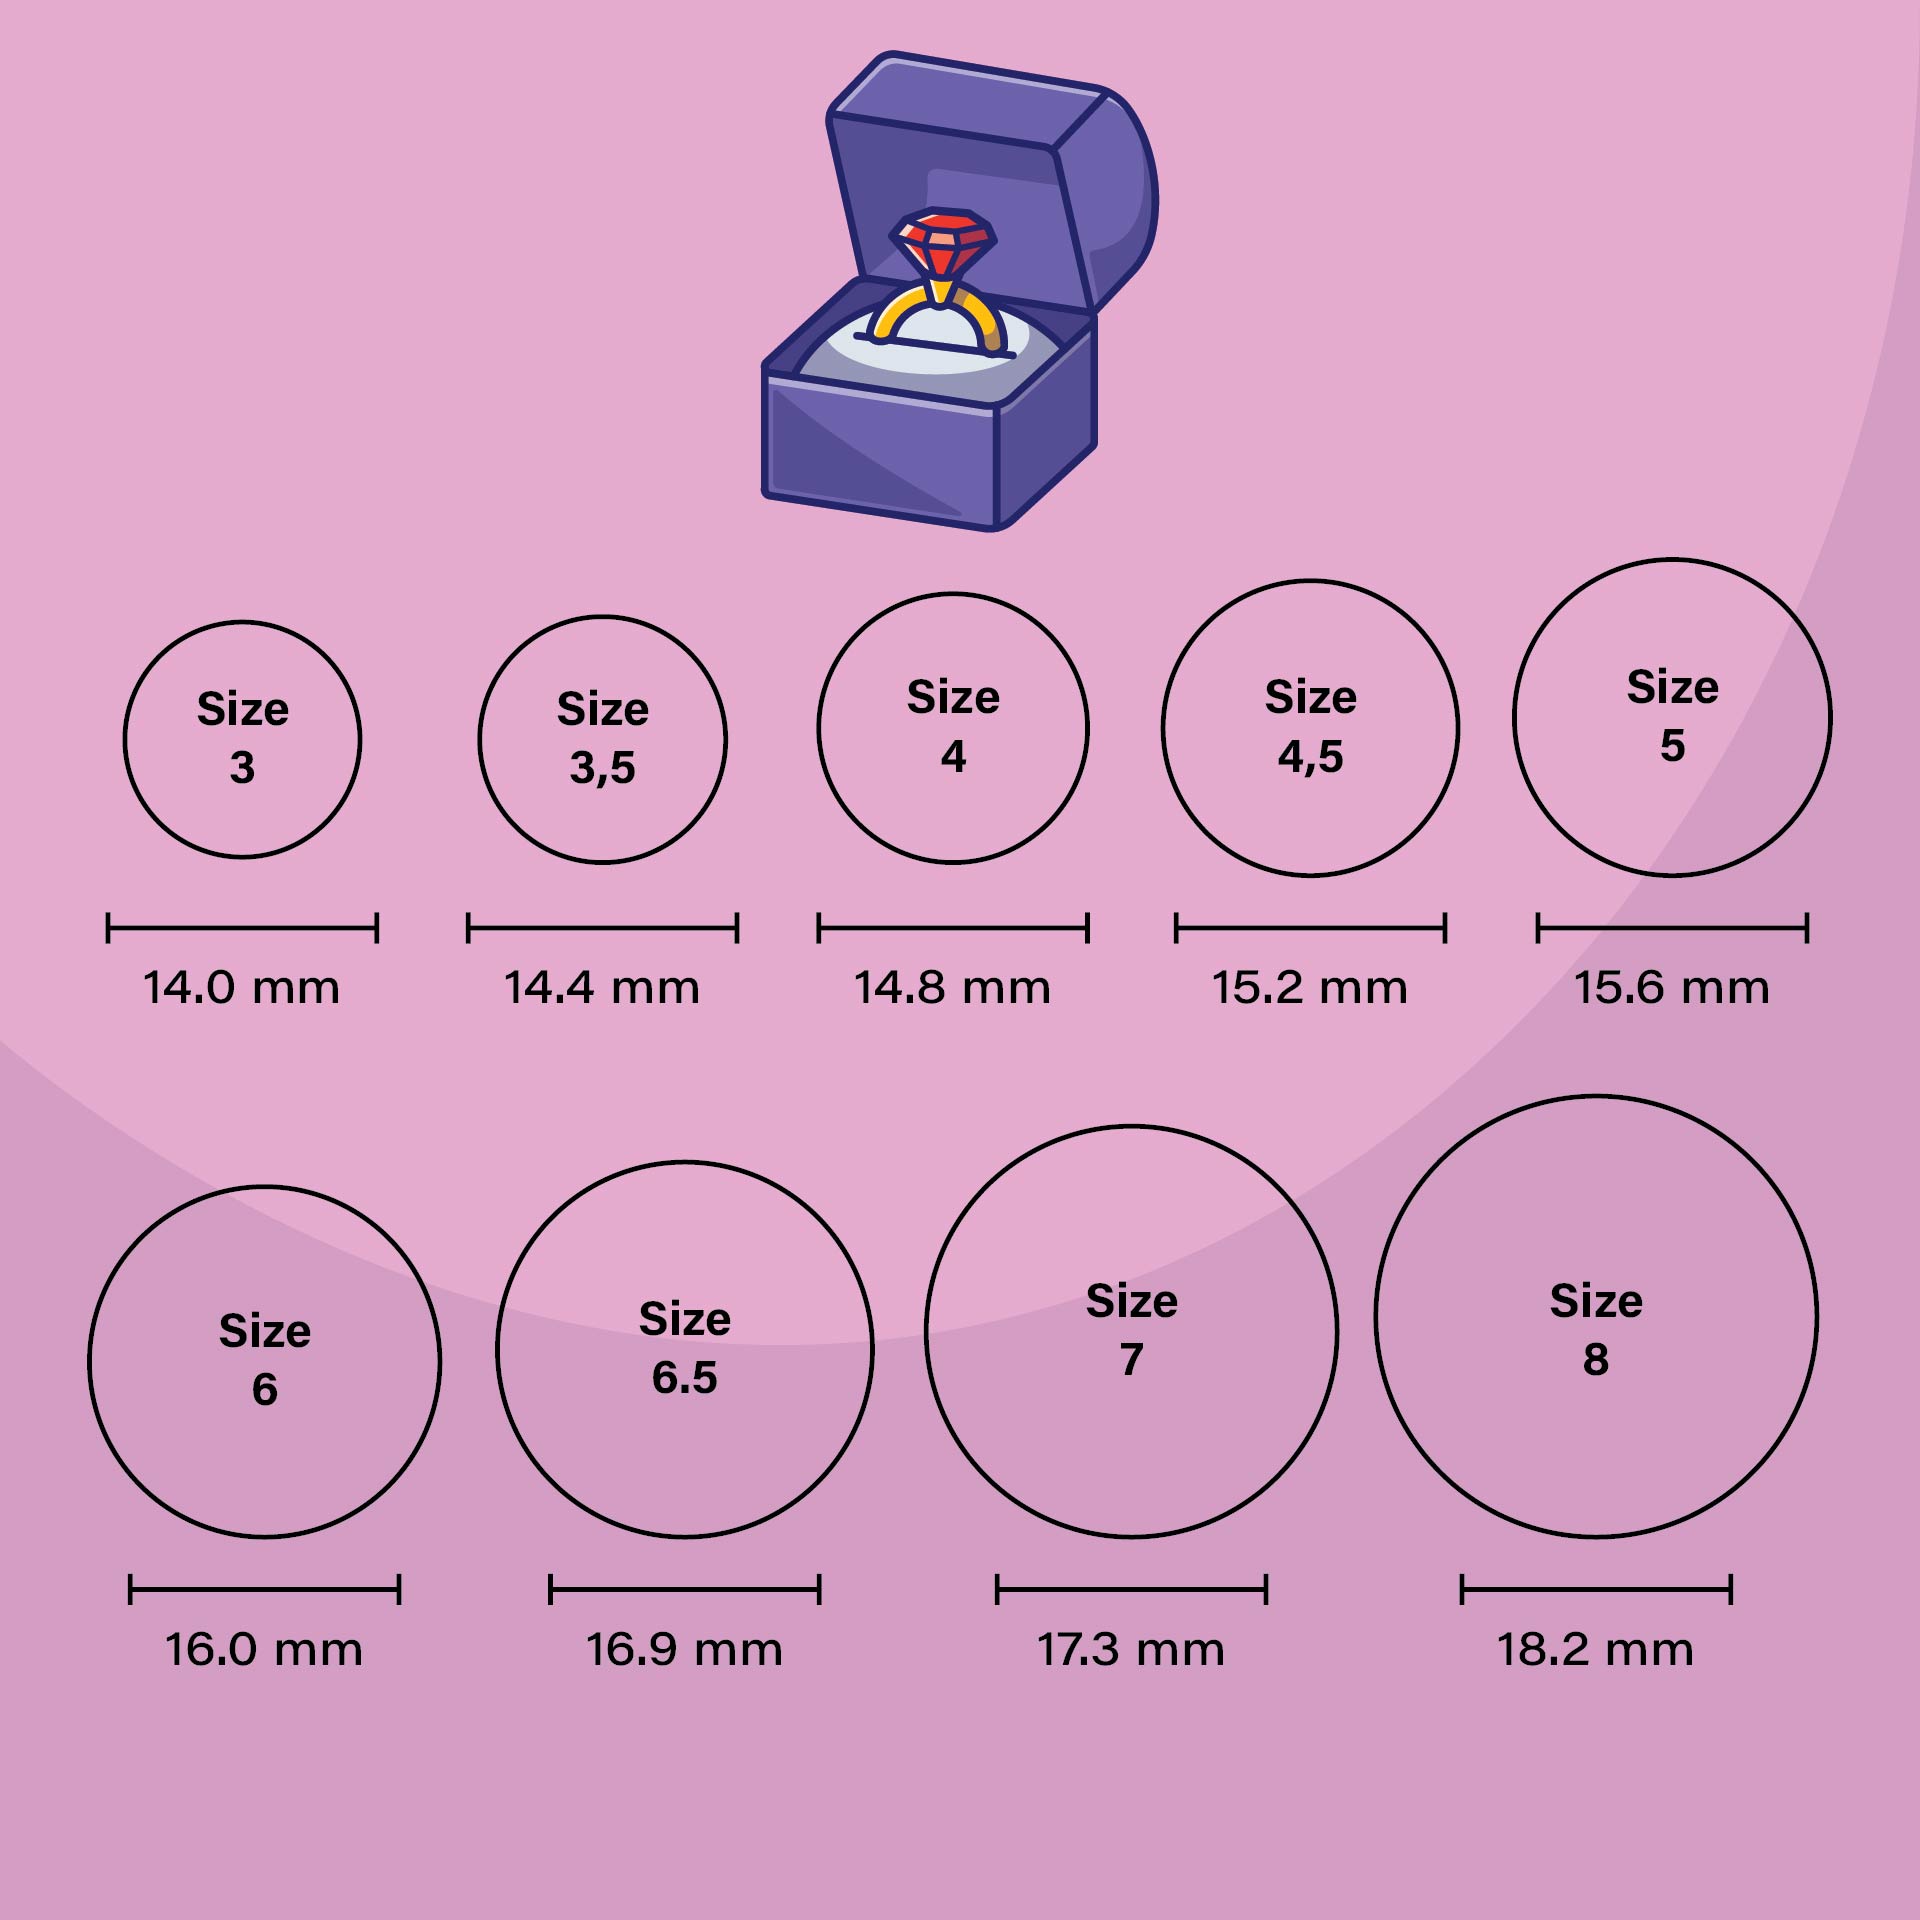 10 Best Men's Printable Ring Size Chart